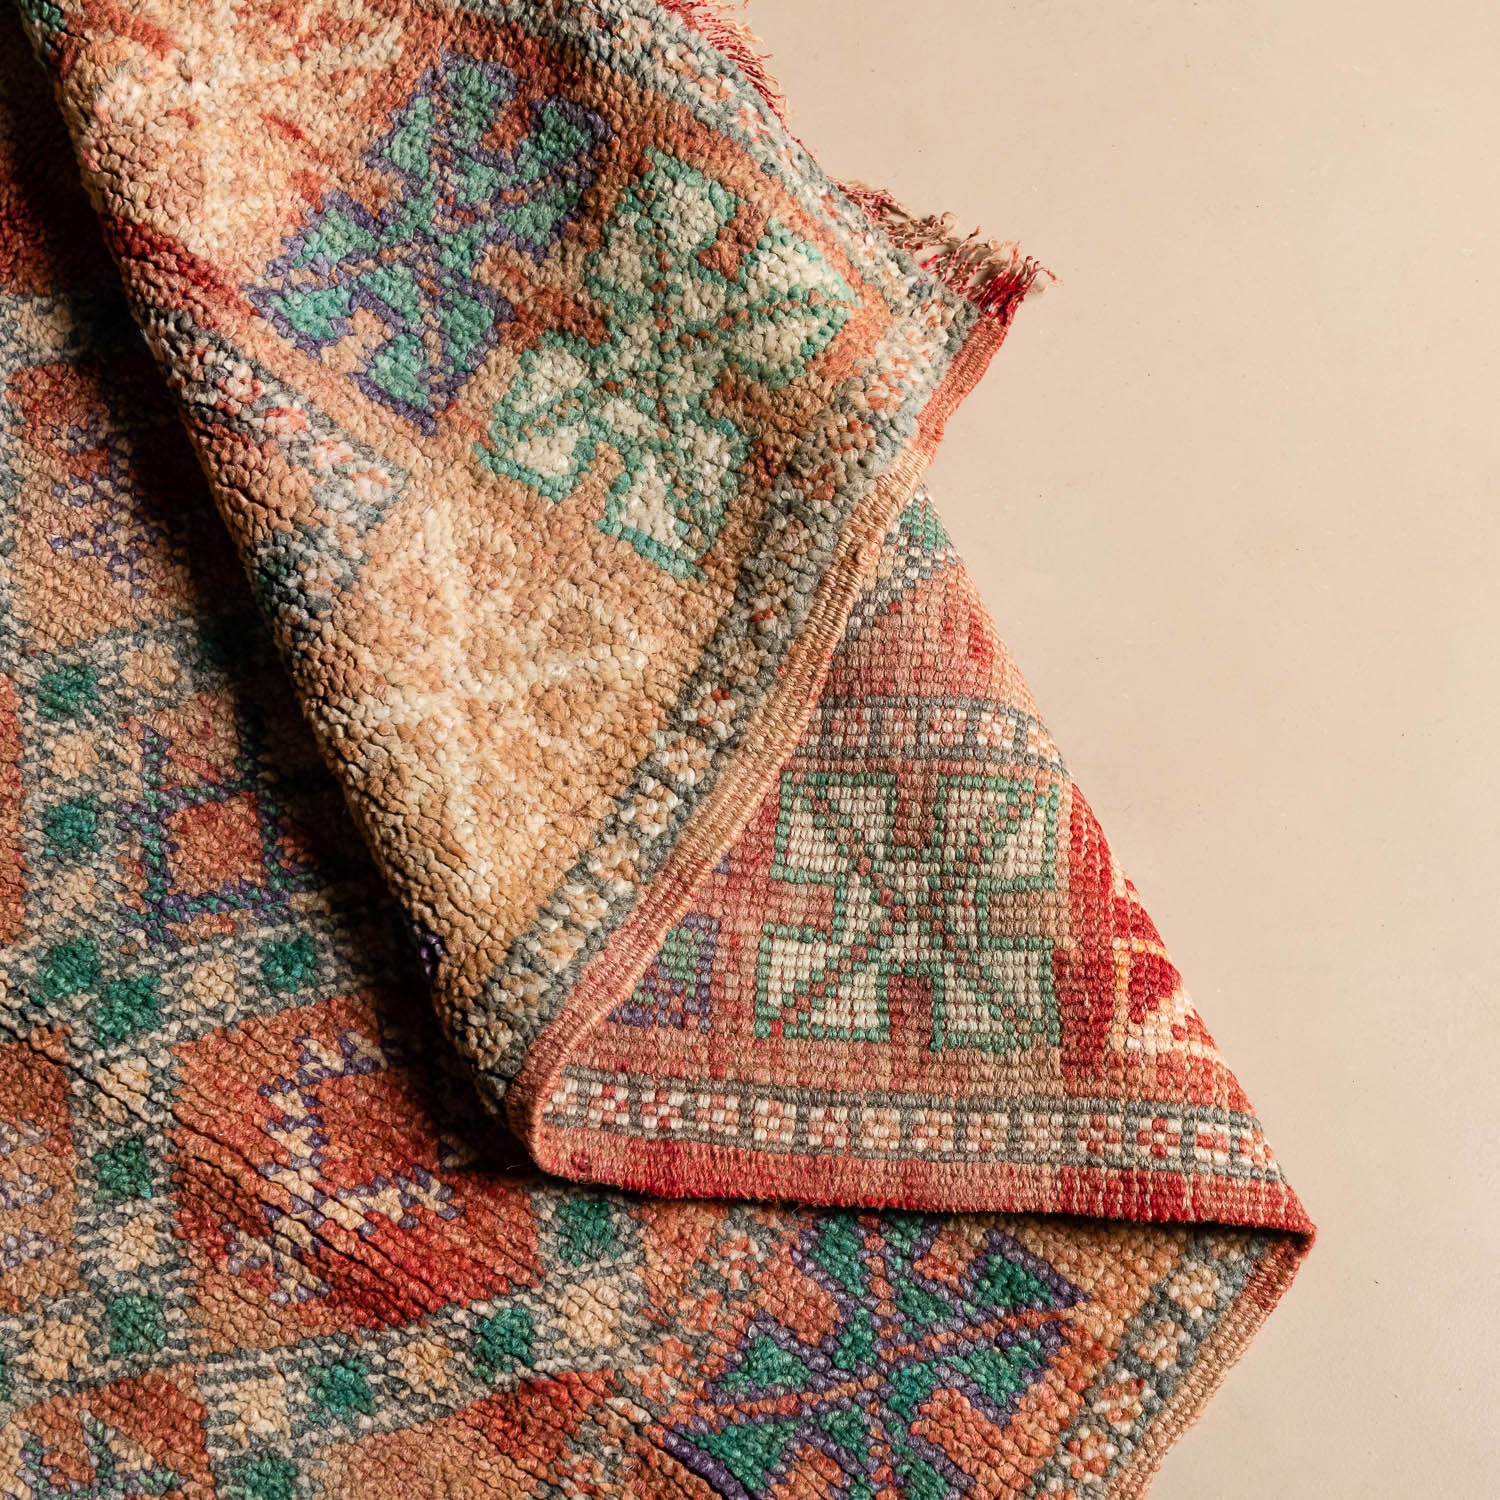 Wafae - Vintage Moroccan rug